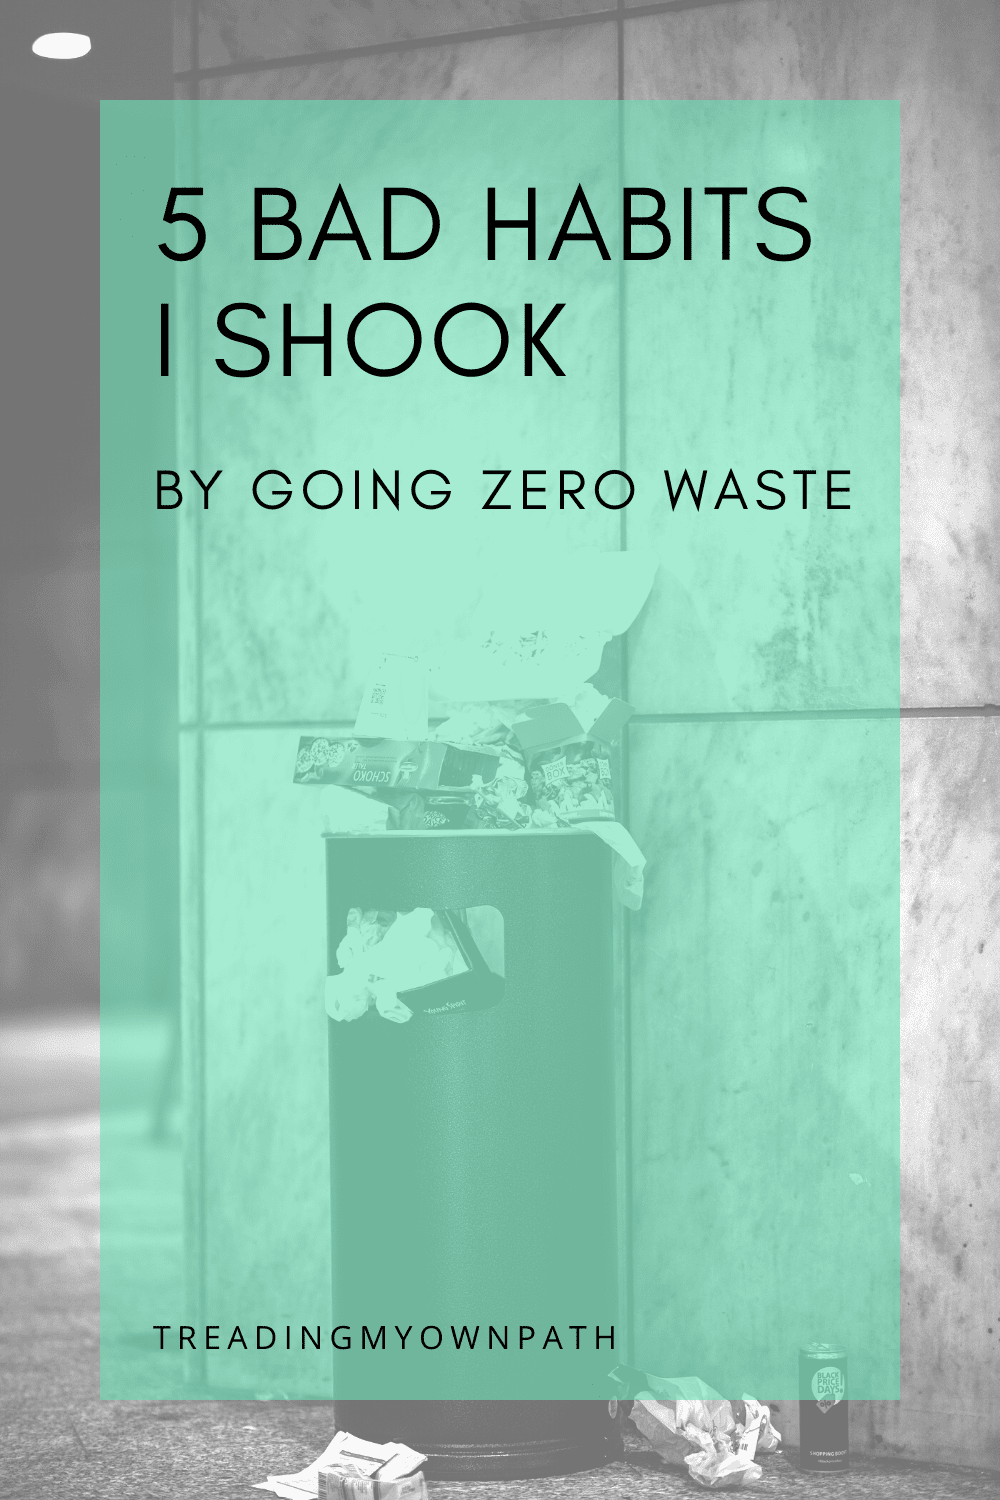 5 Bad Habits I Shook by Going Zero Waste